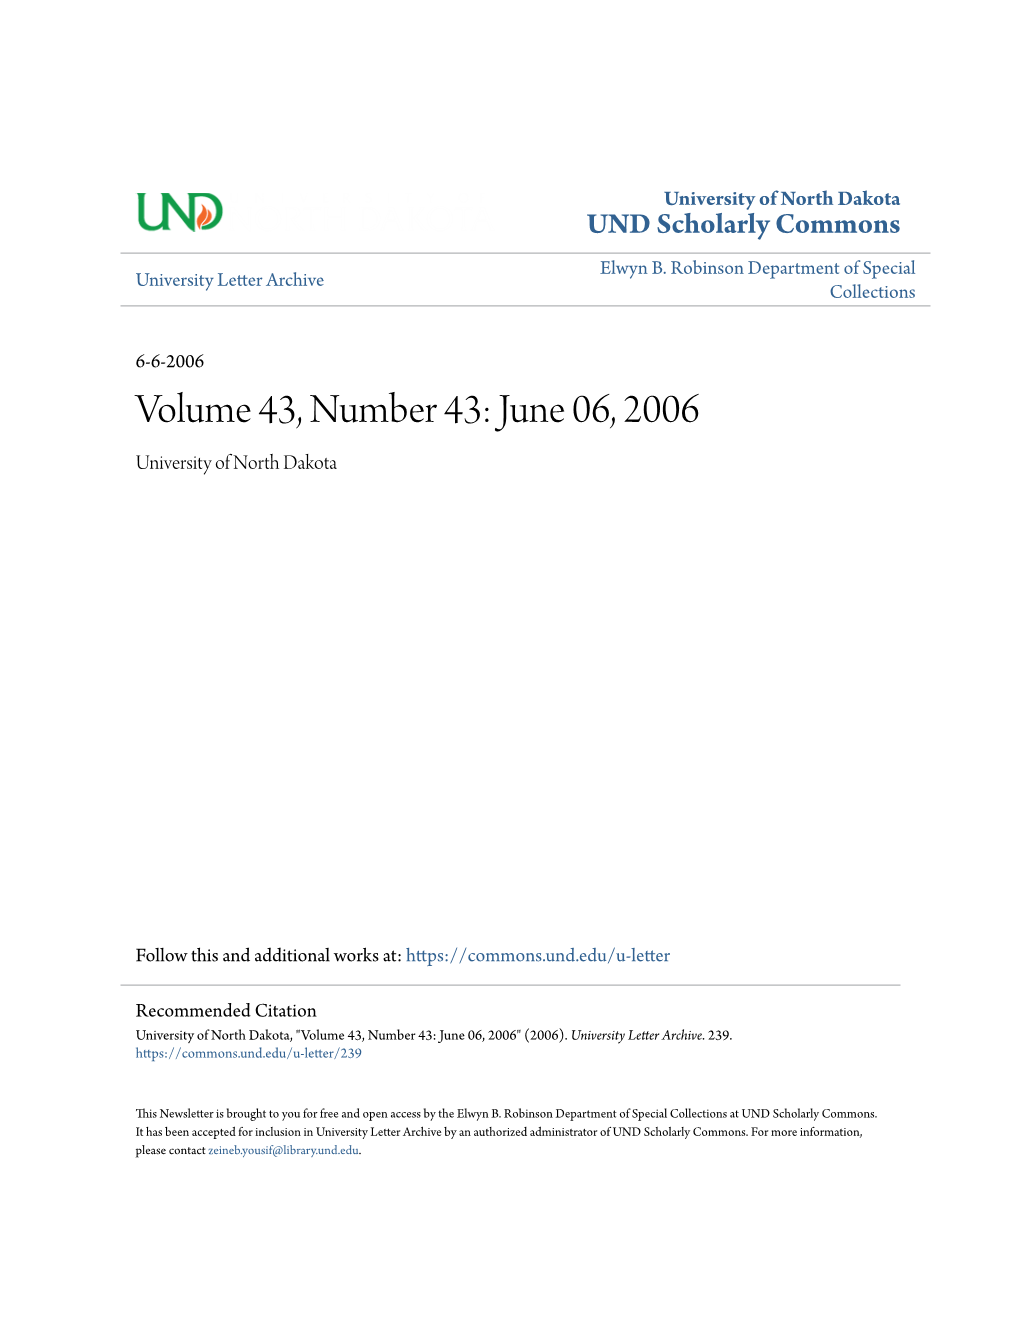 Volume 43, Number 43: June 06, 2006 University of North Dakota